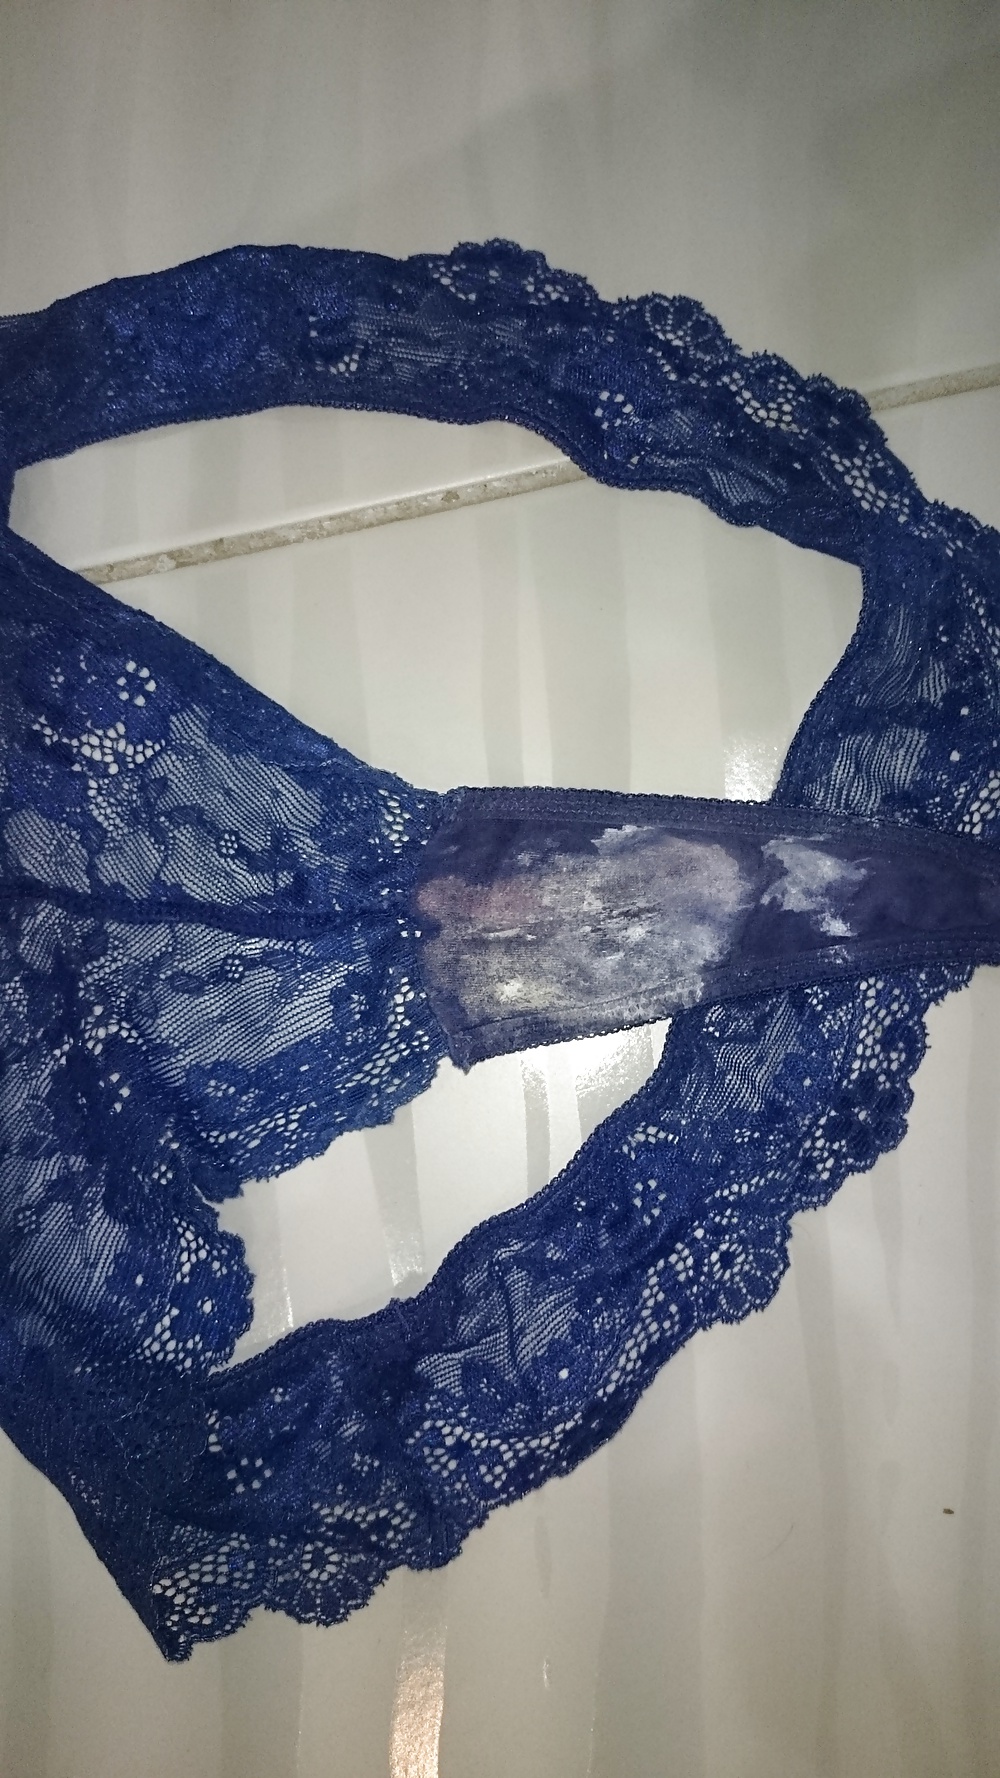 Underwear. Visiting a friend's wife porn gallery